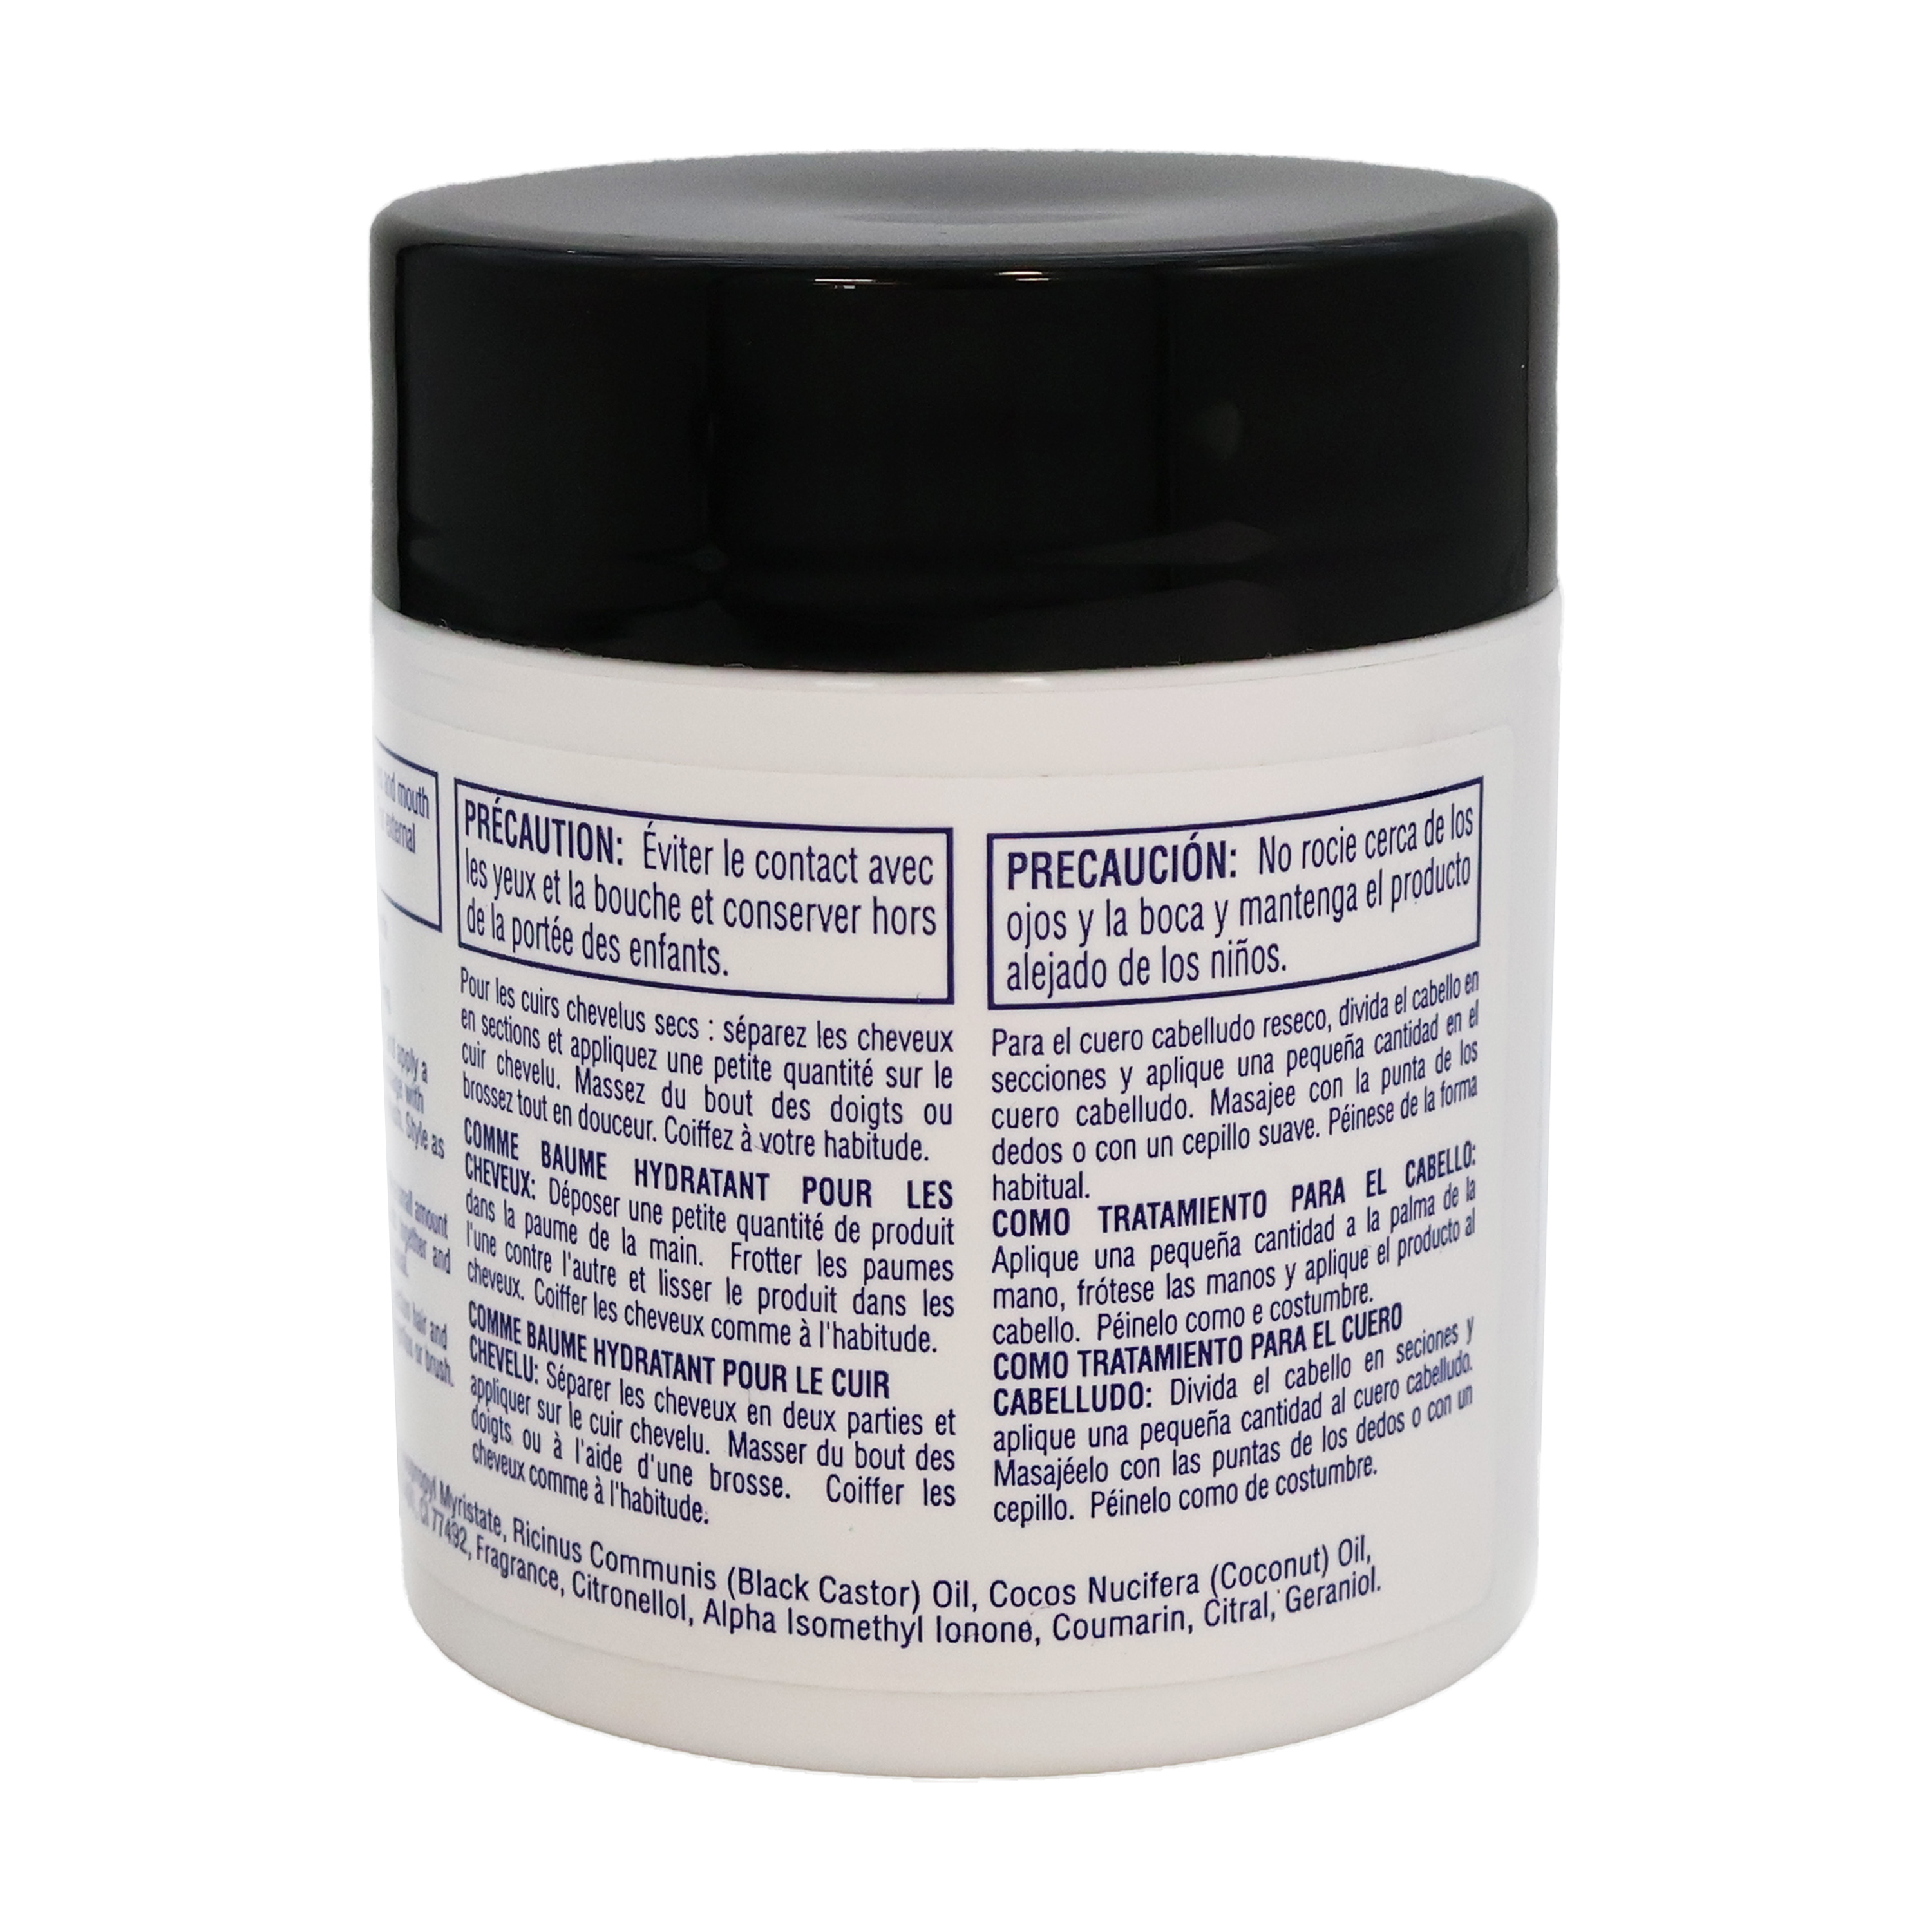 Isoplus Black Castor Oil & Coconut Oil Hair & Scalp Conditioner 5.25 Oz.,Pack of 3 - image 3 of 3